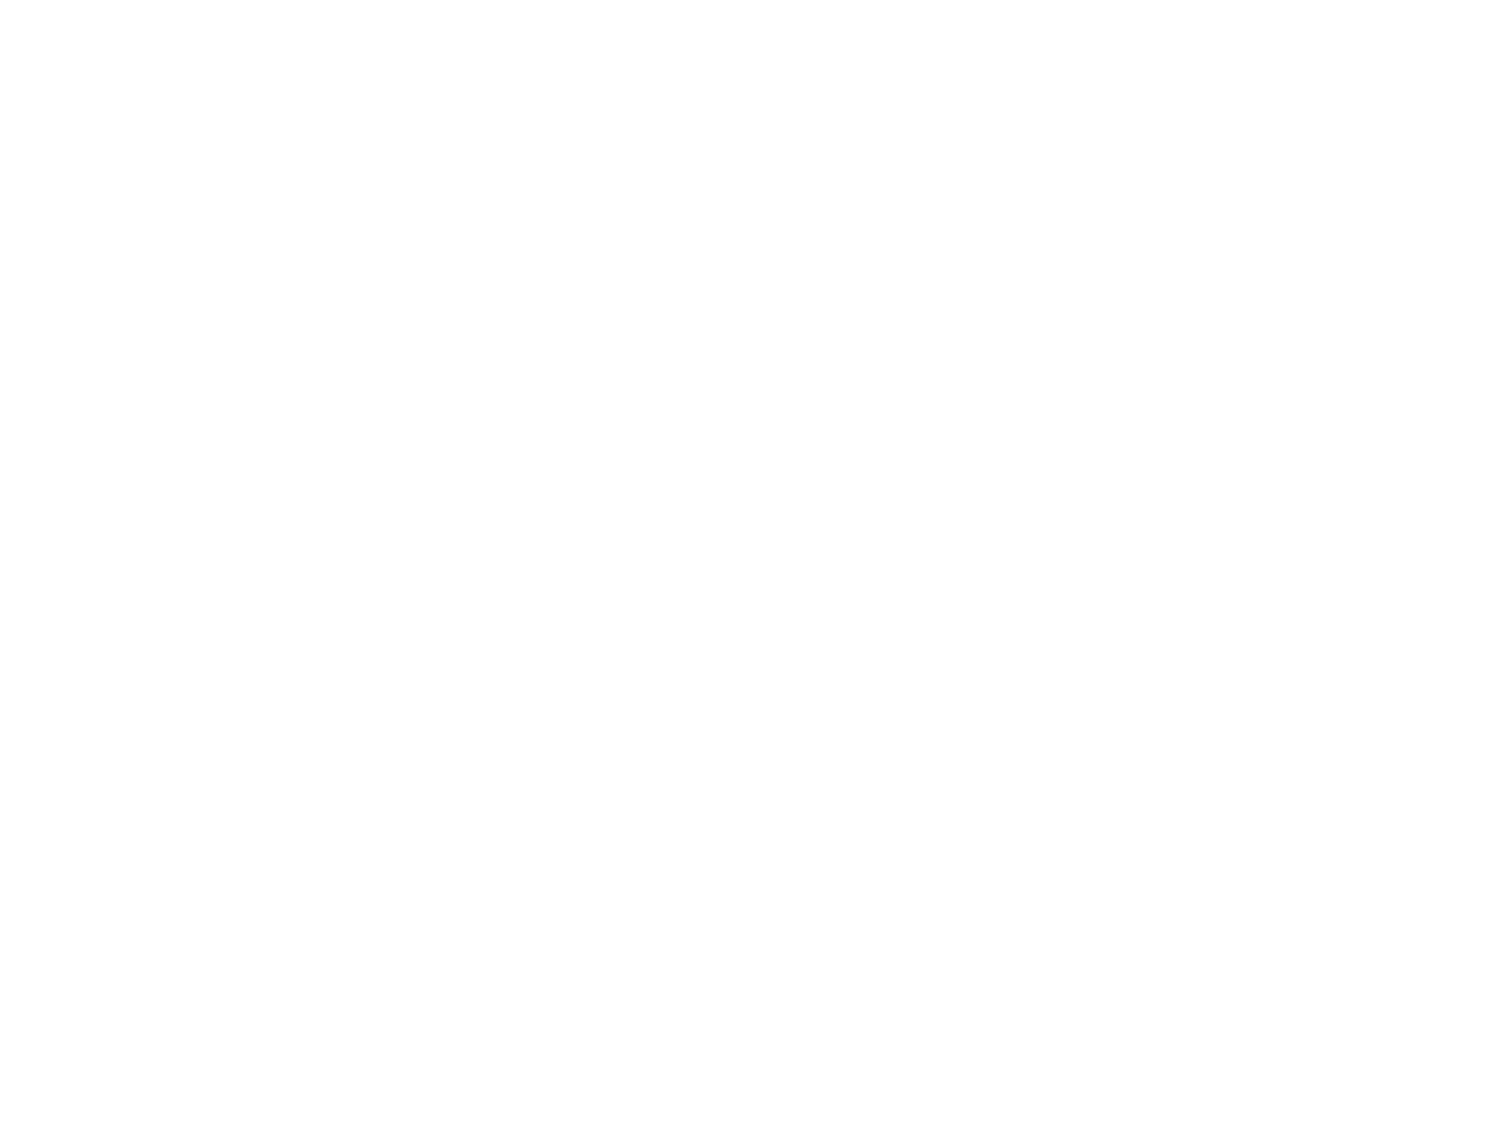 7 Palms Entertainment, LLC